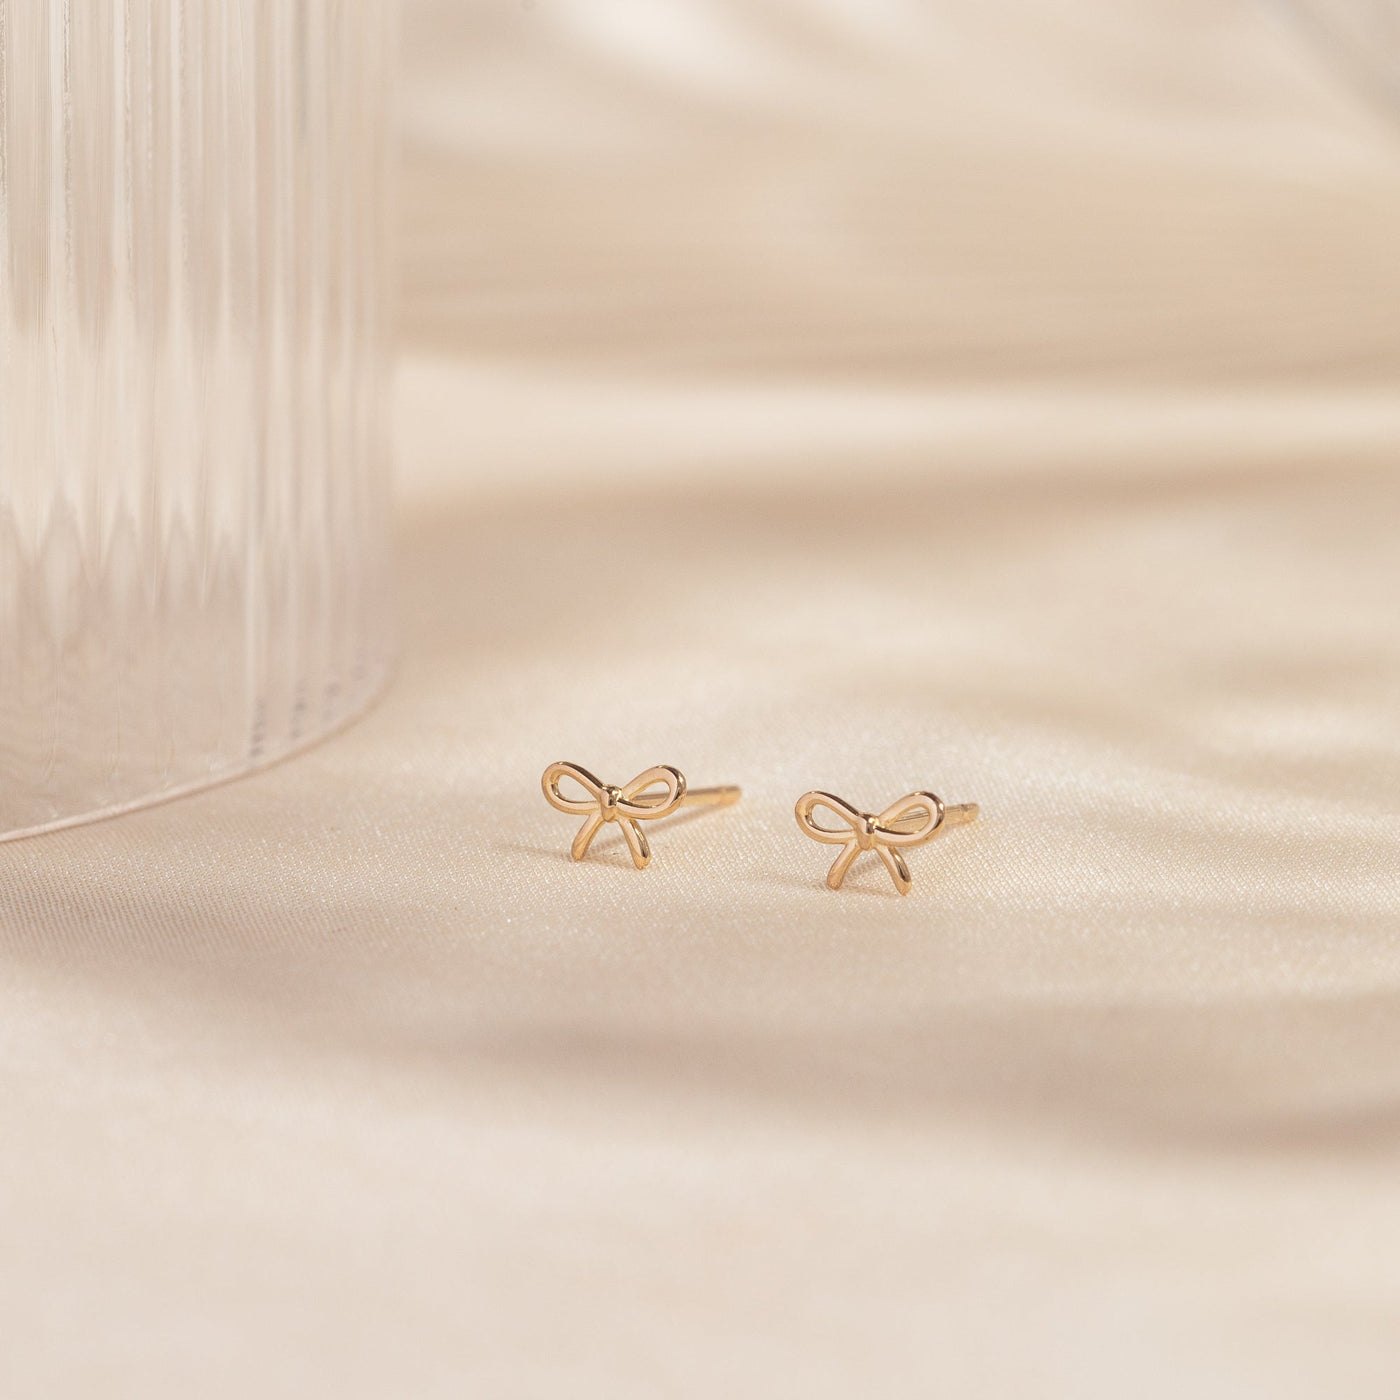 Tiny Bow Stud Earrings | Simple & Dainty Jewelry